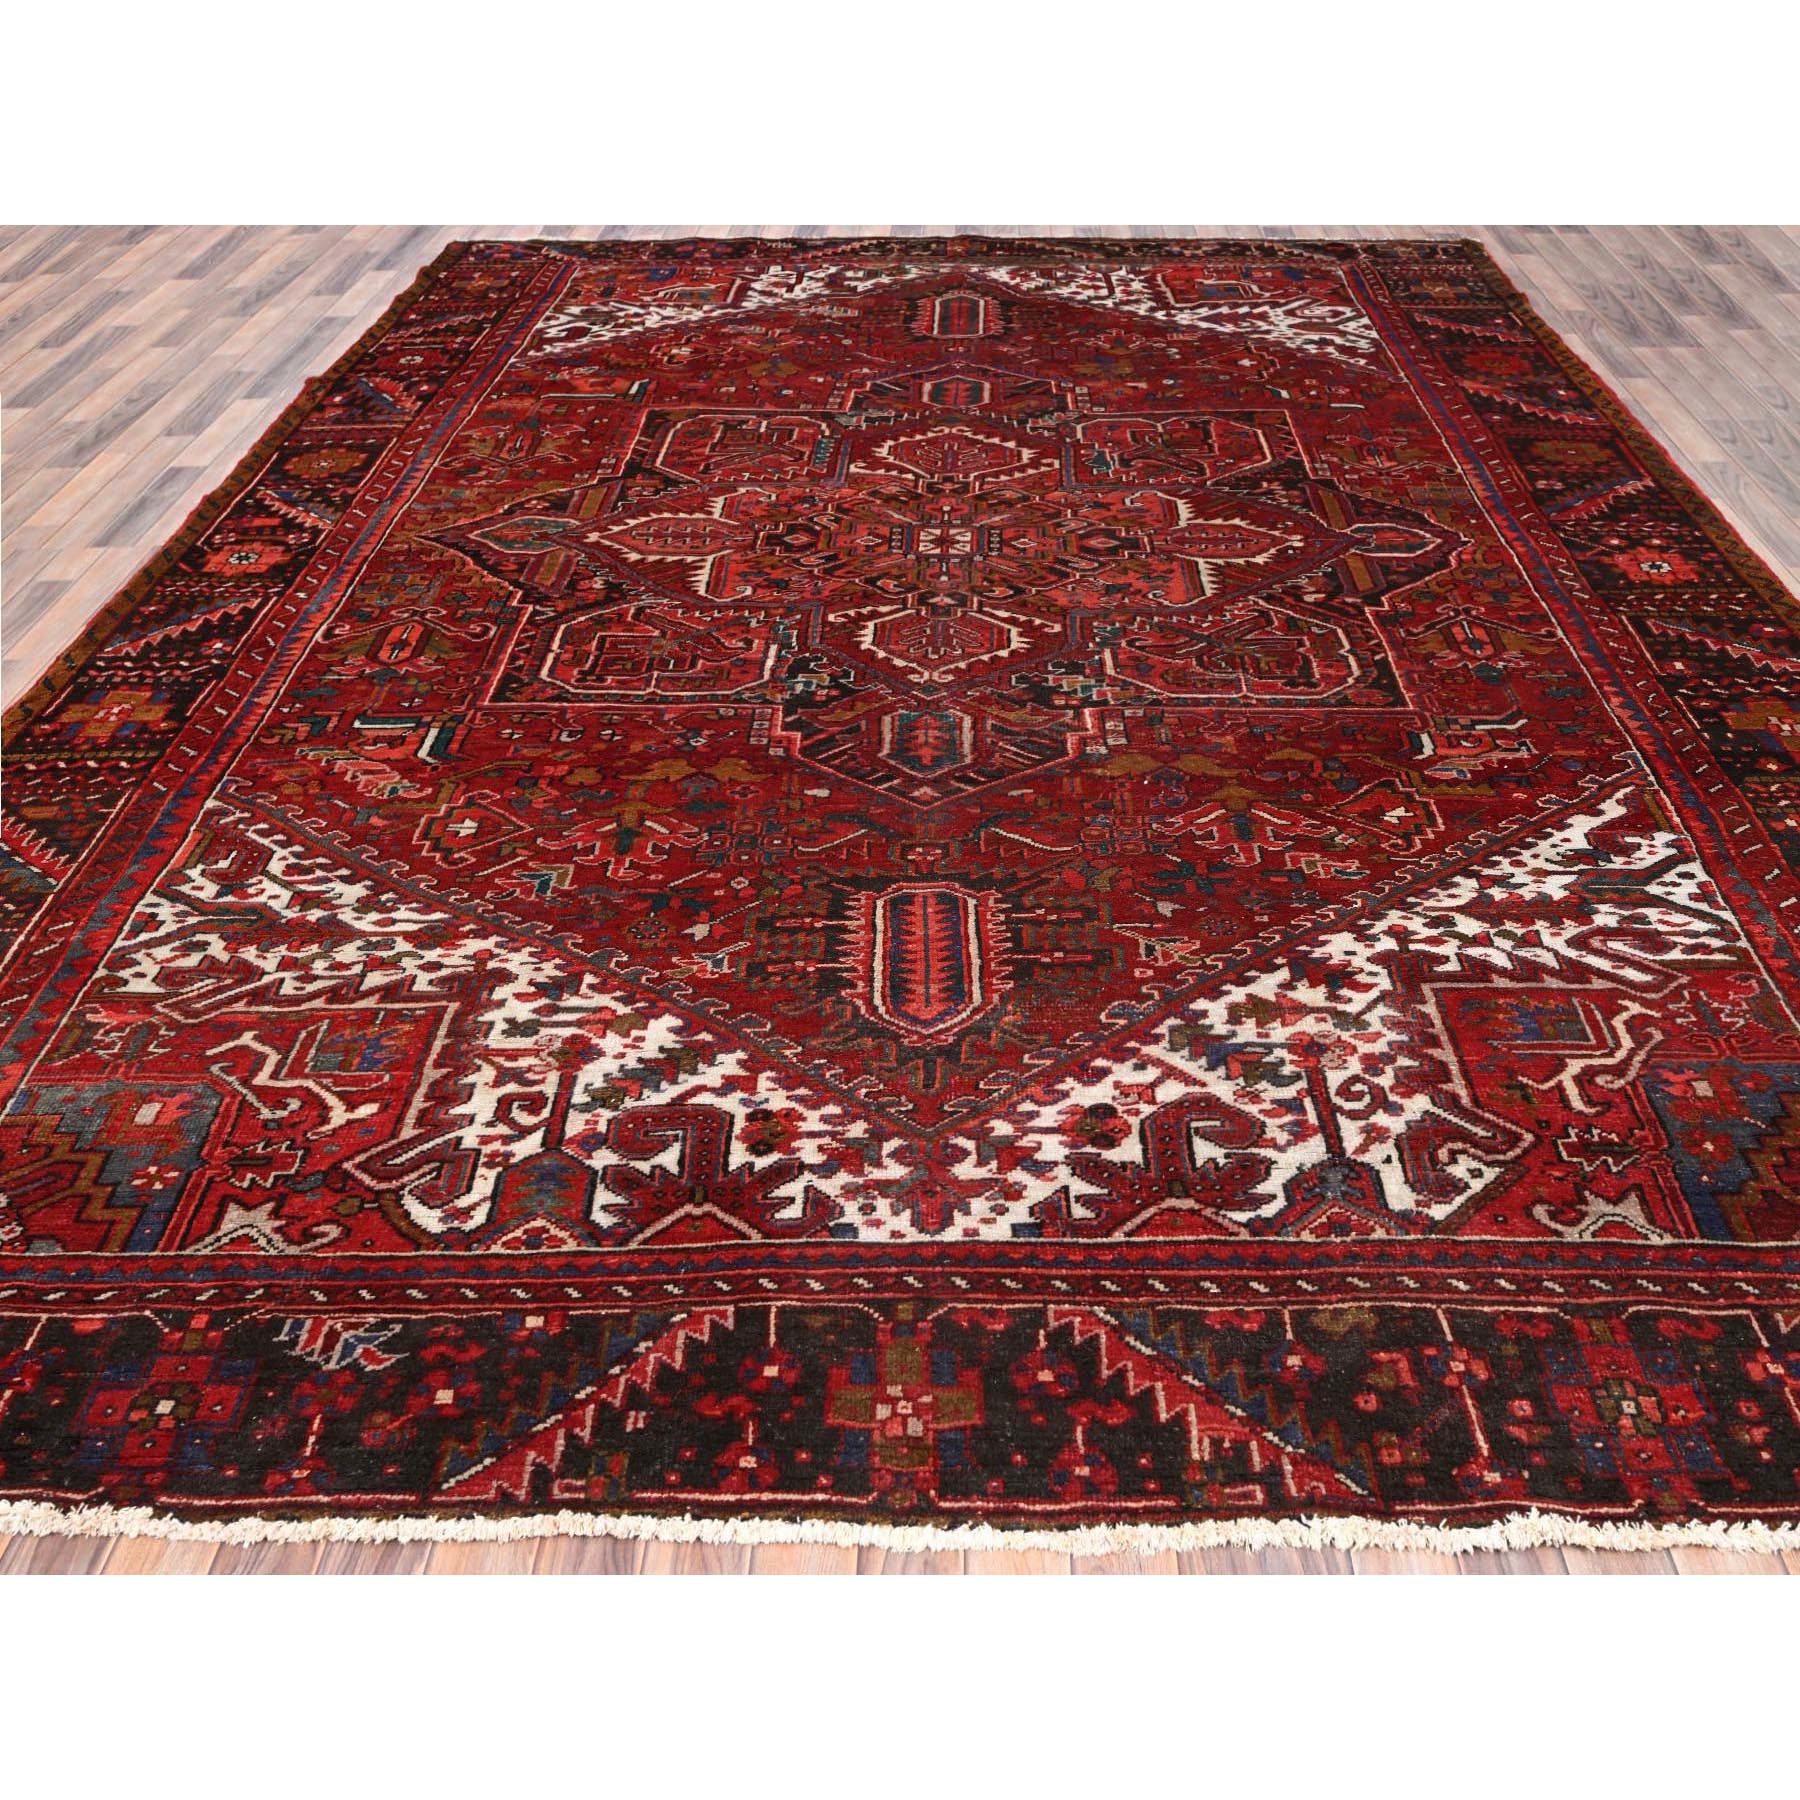 10'2"x13'1" Ajax Red, Hand Woven, Semi Antique Persian Heriz, Good Condition, Rustic Look, Worn Wool, Oriental Rug 